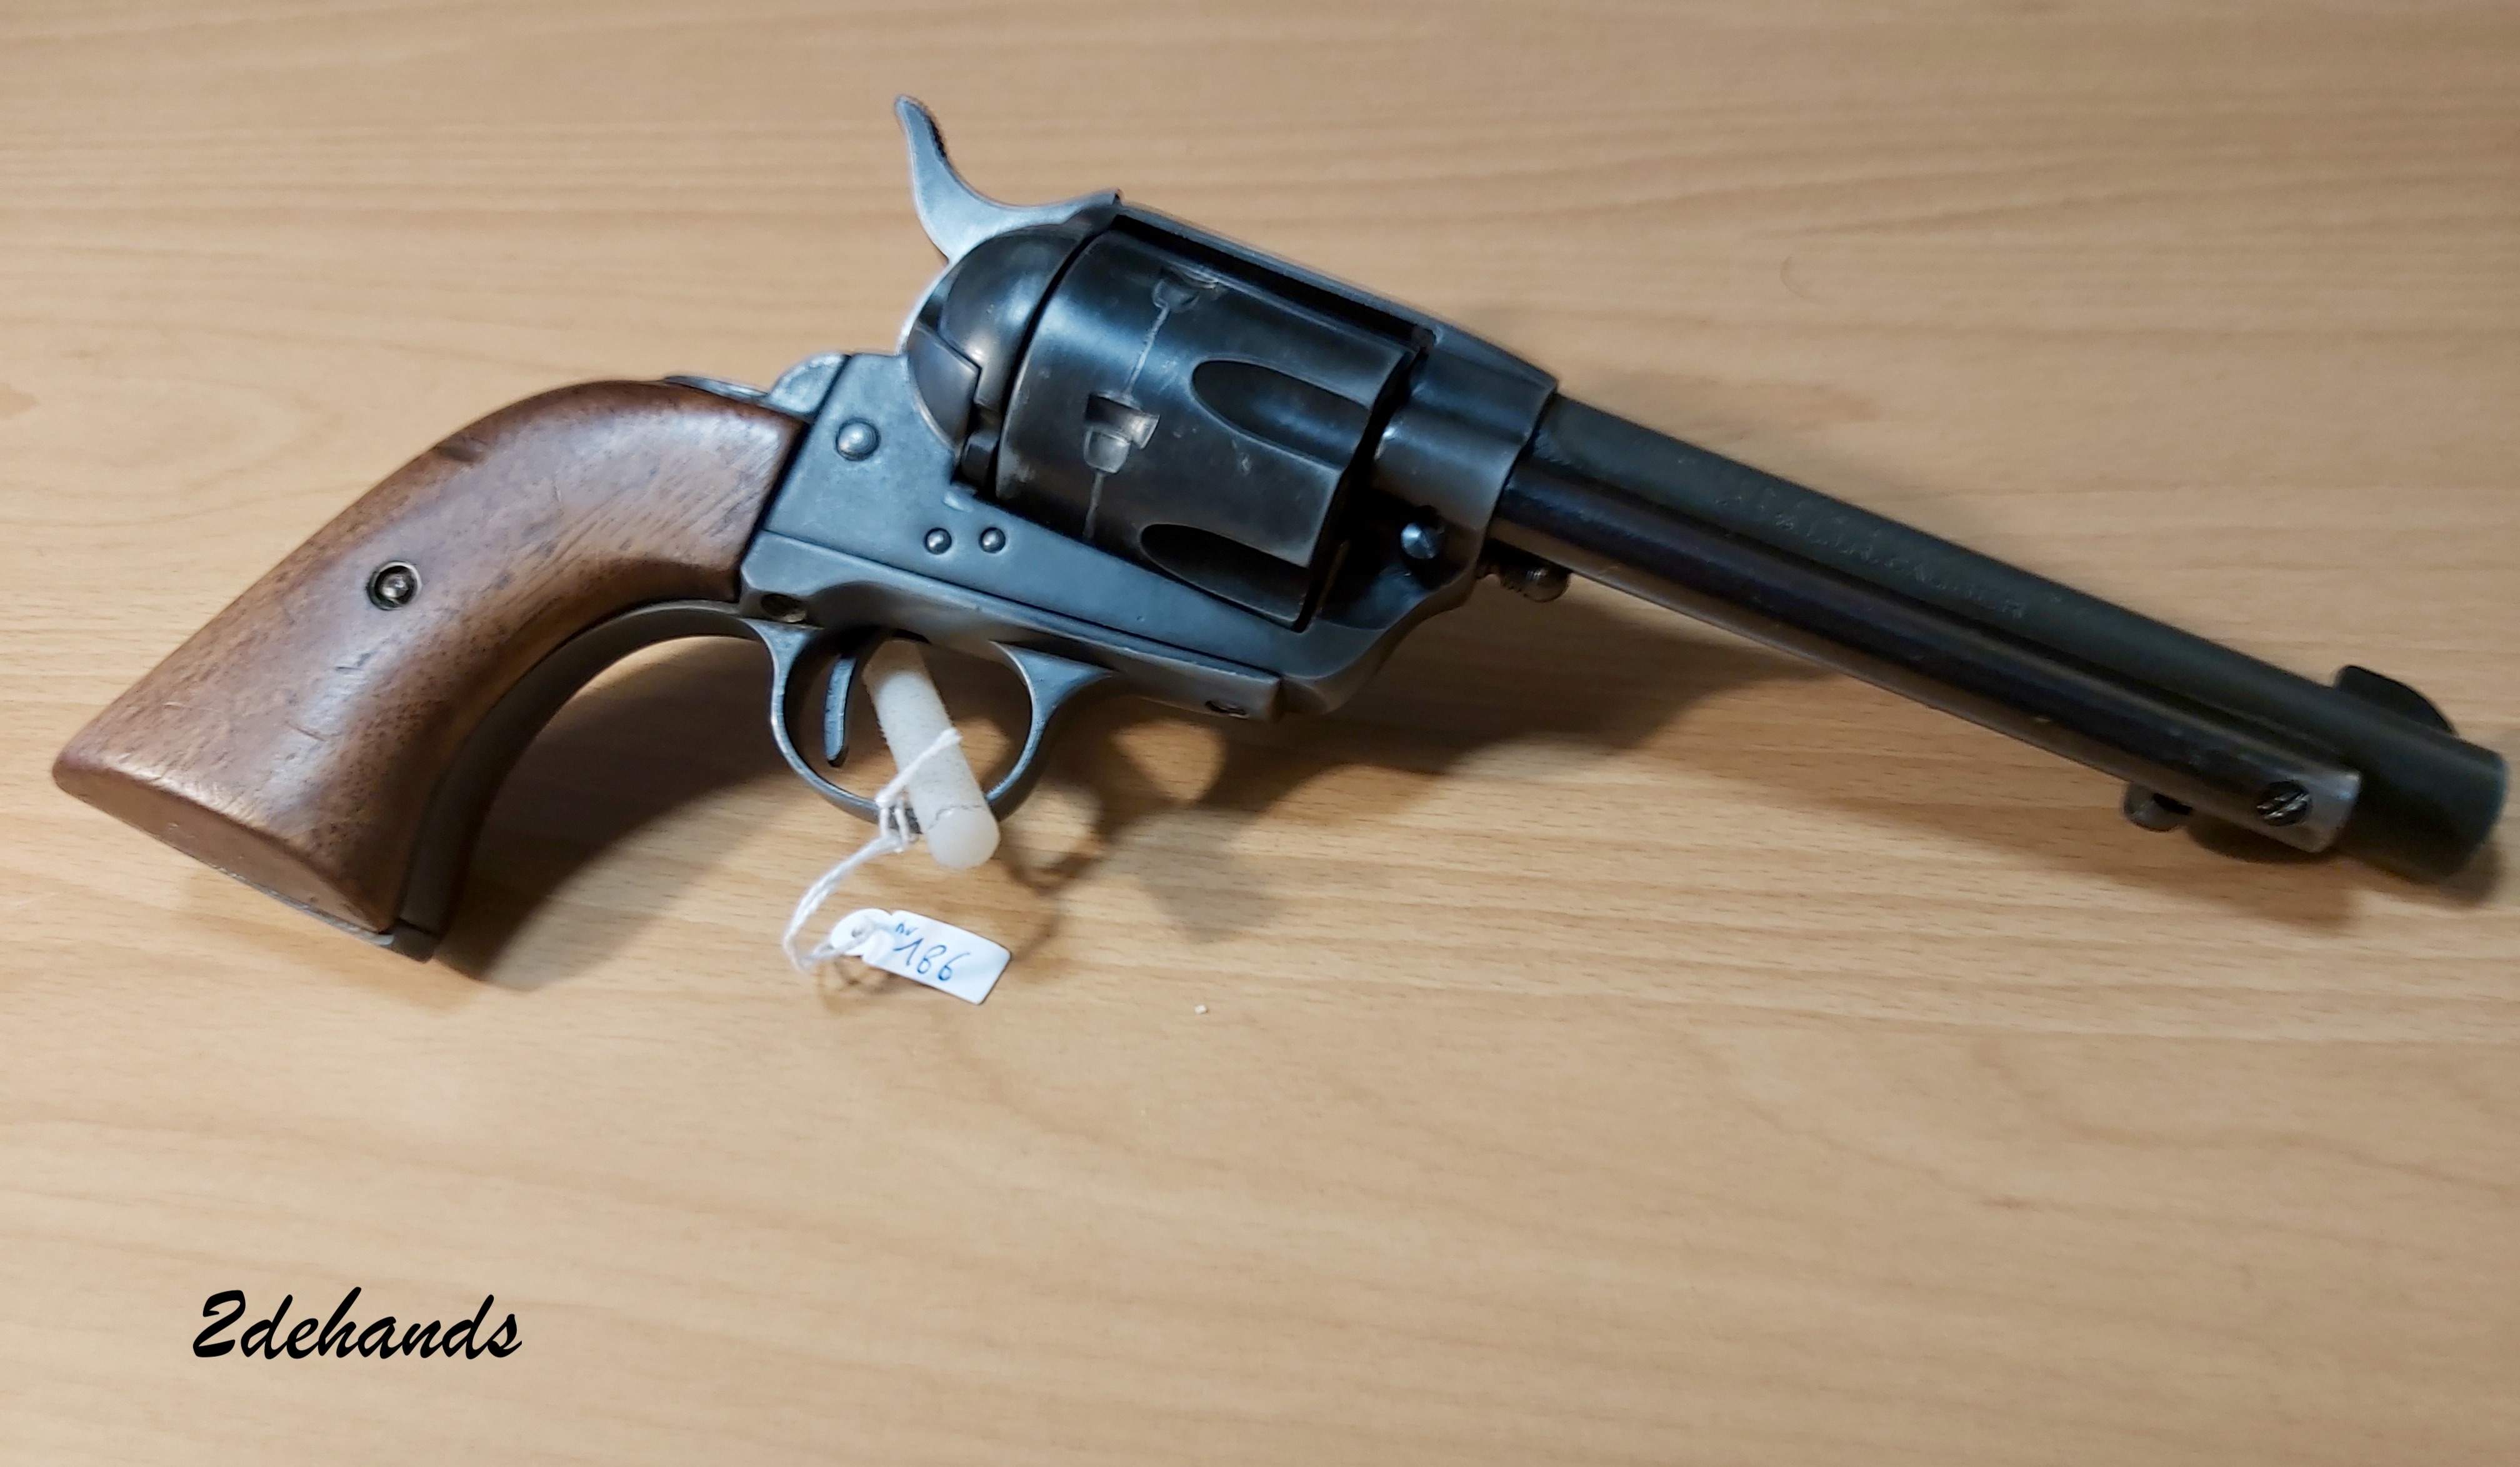 * HY hunter western six shooter, 22lr, prijs 299€